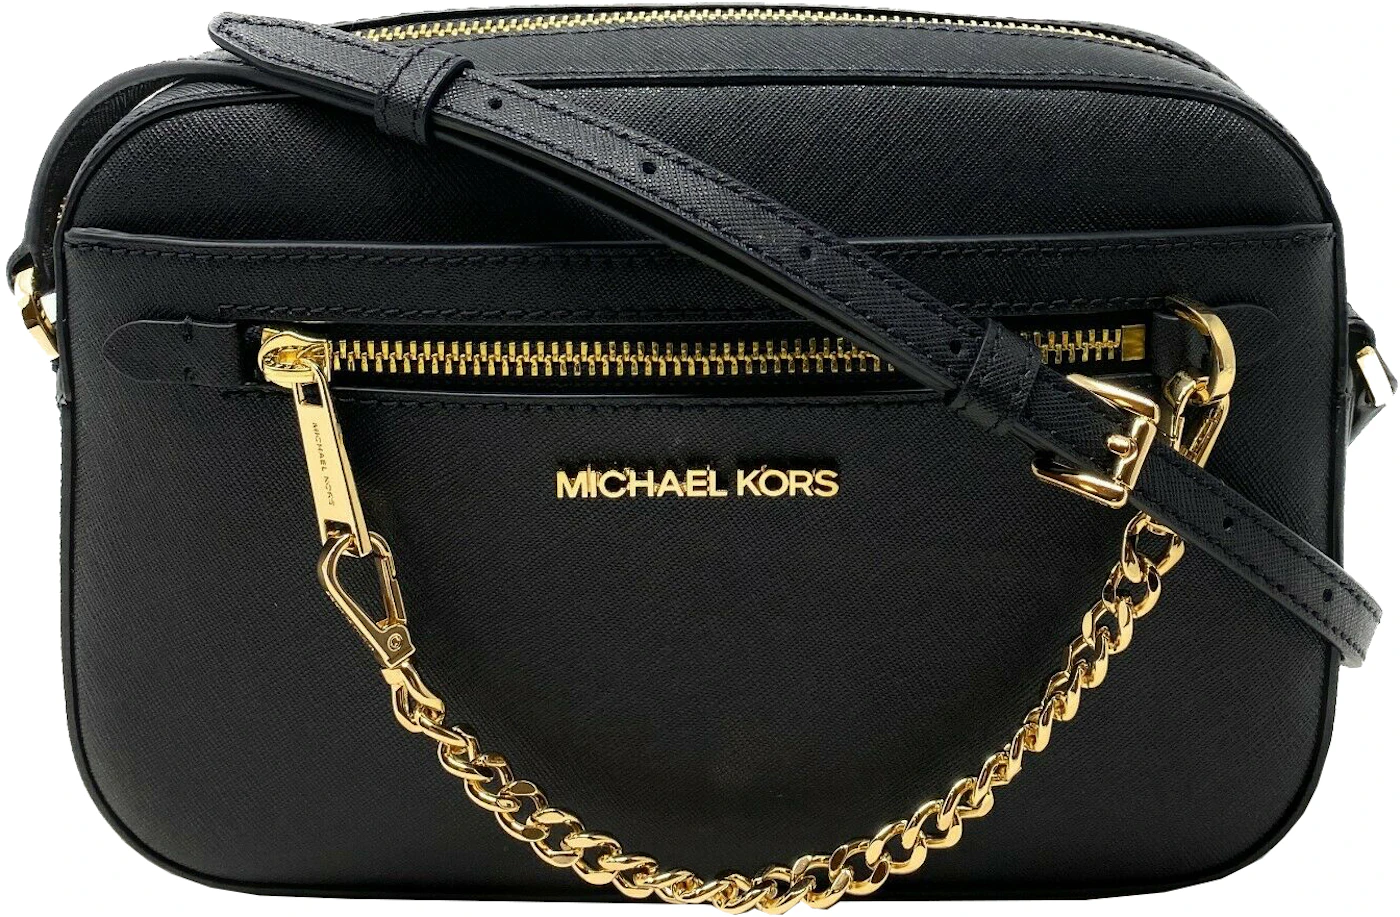 Michael Kors black bag with gold studs  Michael kors bag black, Michael  kors, Michael kors jet